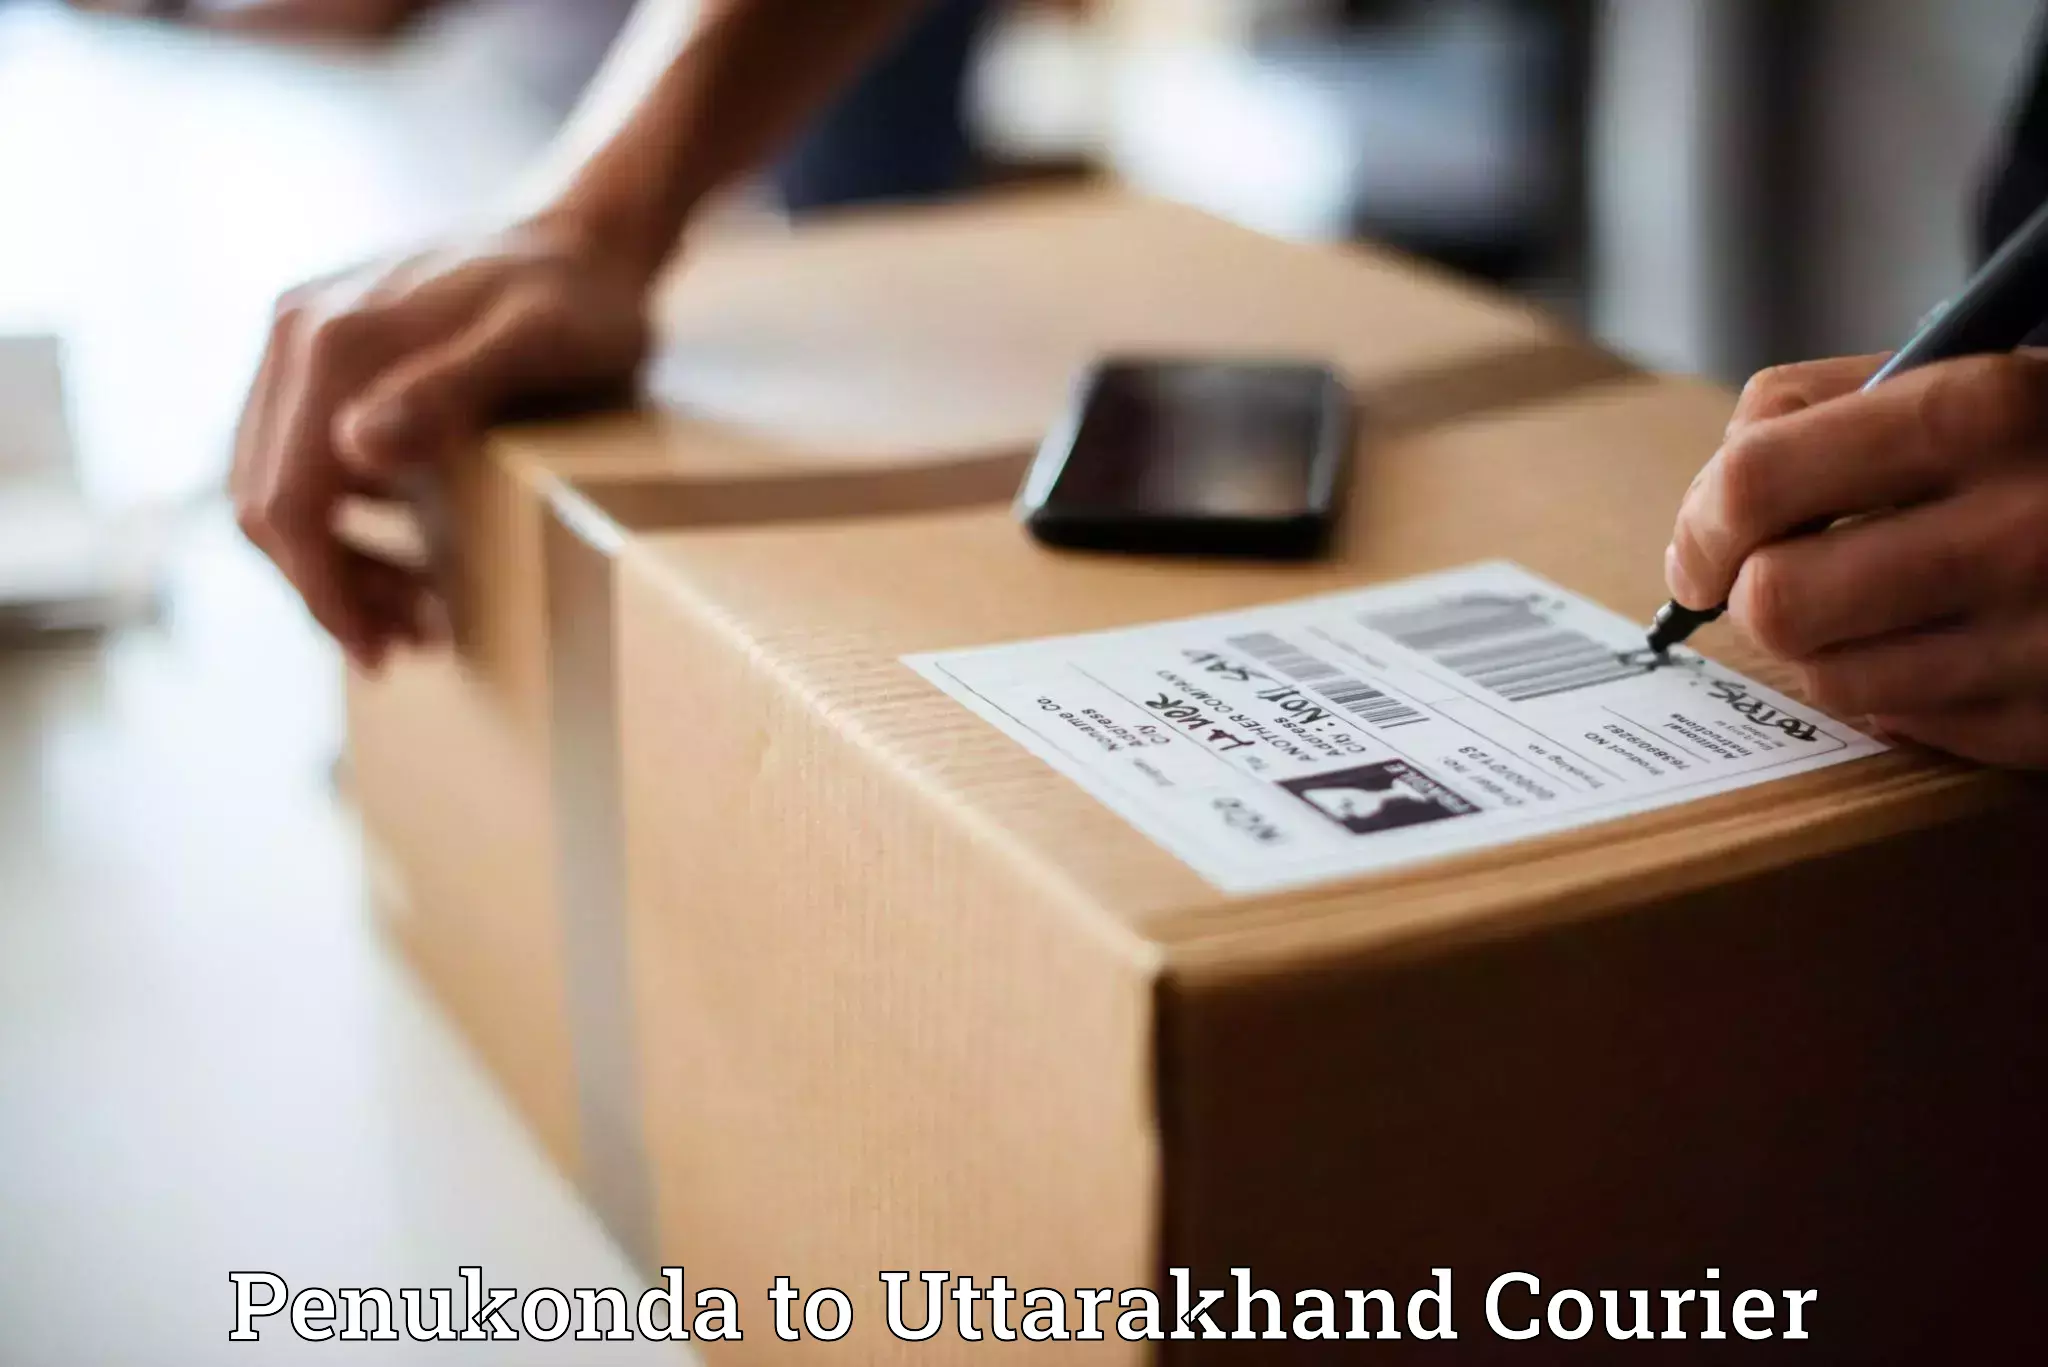 High value parcel delivery in Penukonda to Joshimath